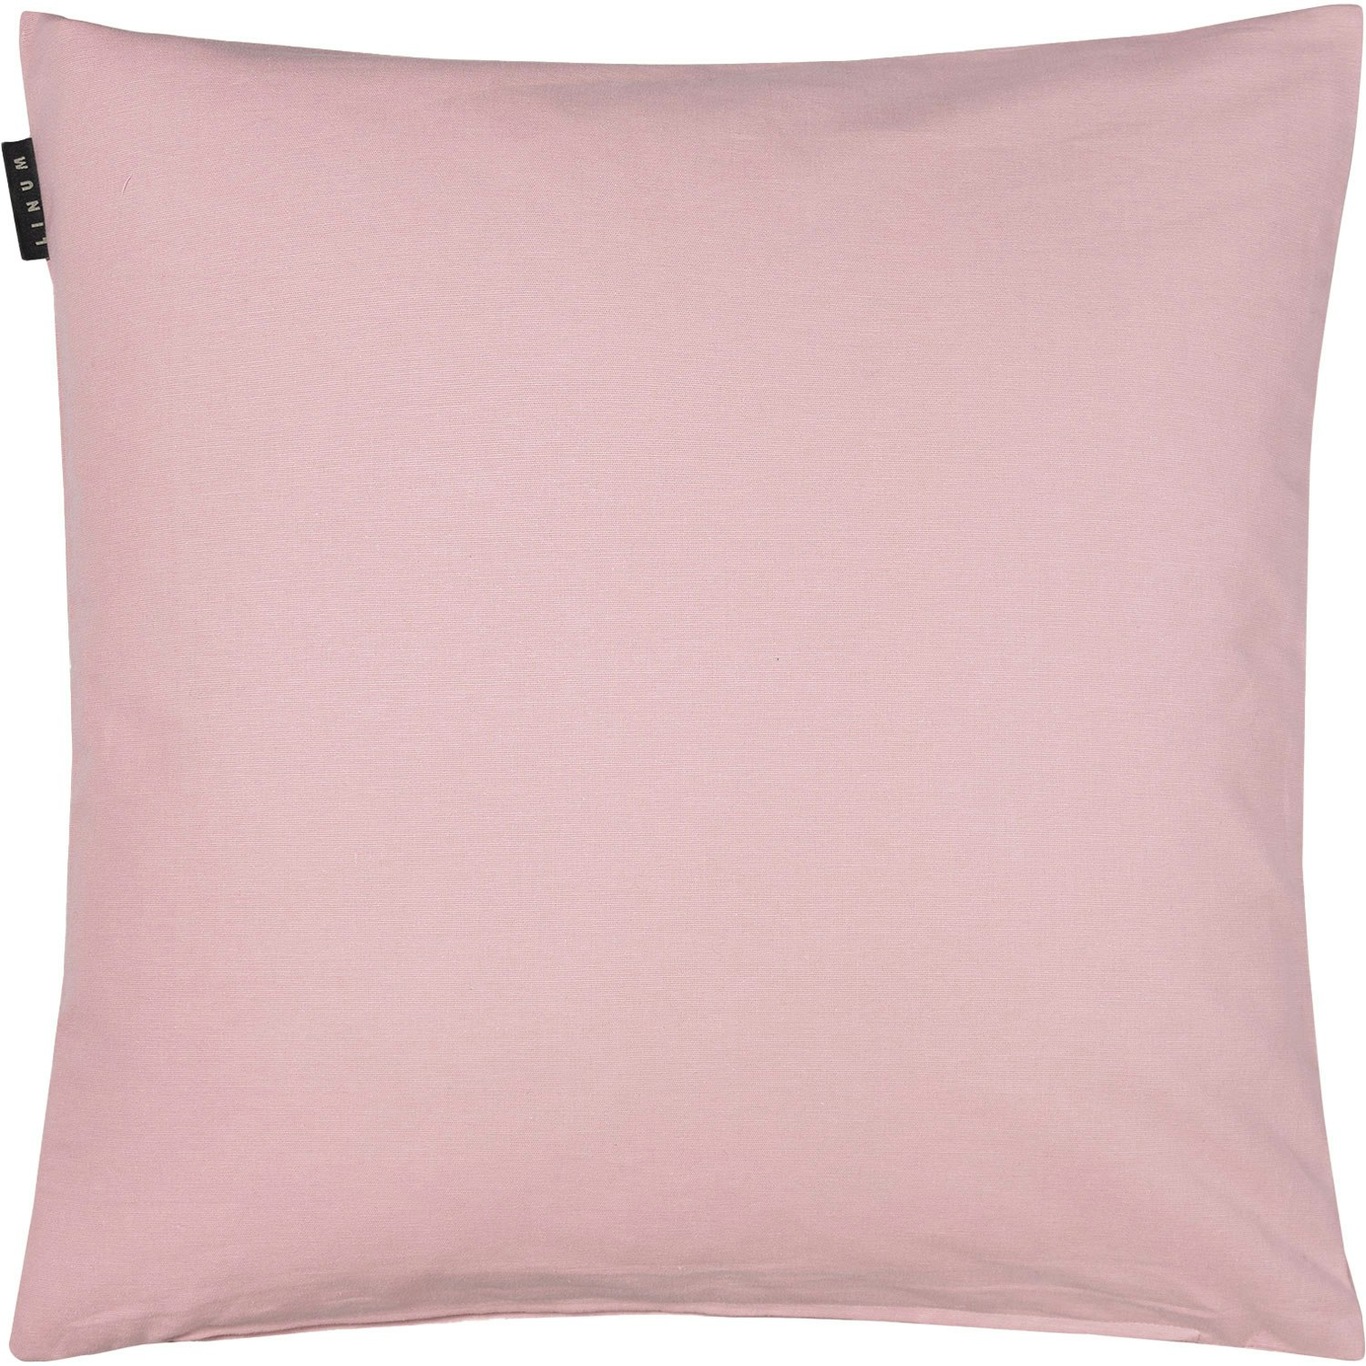 Annabell Cushion Cover 50x50 cm, Dusty Pink